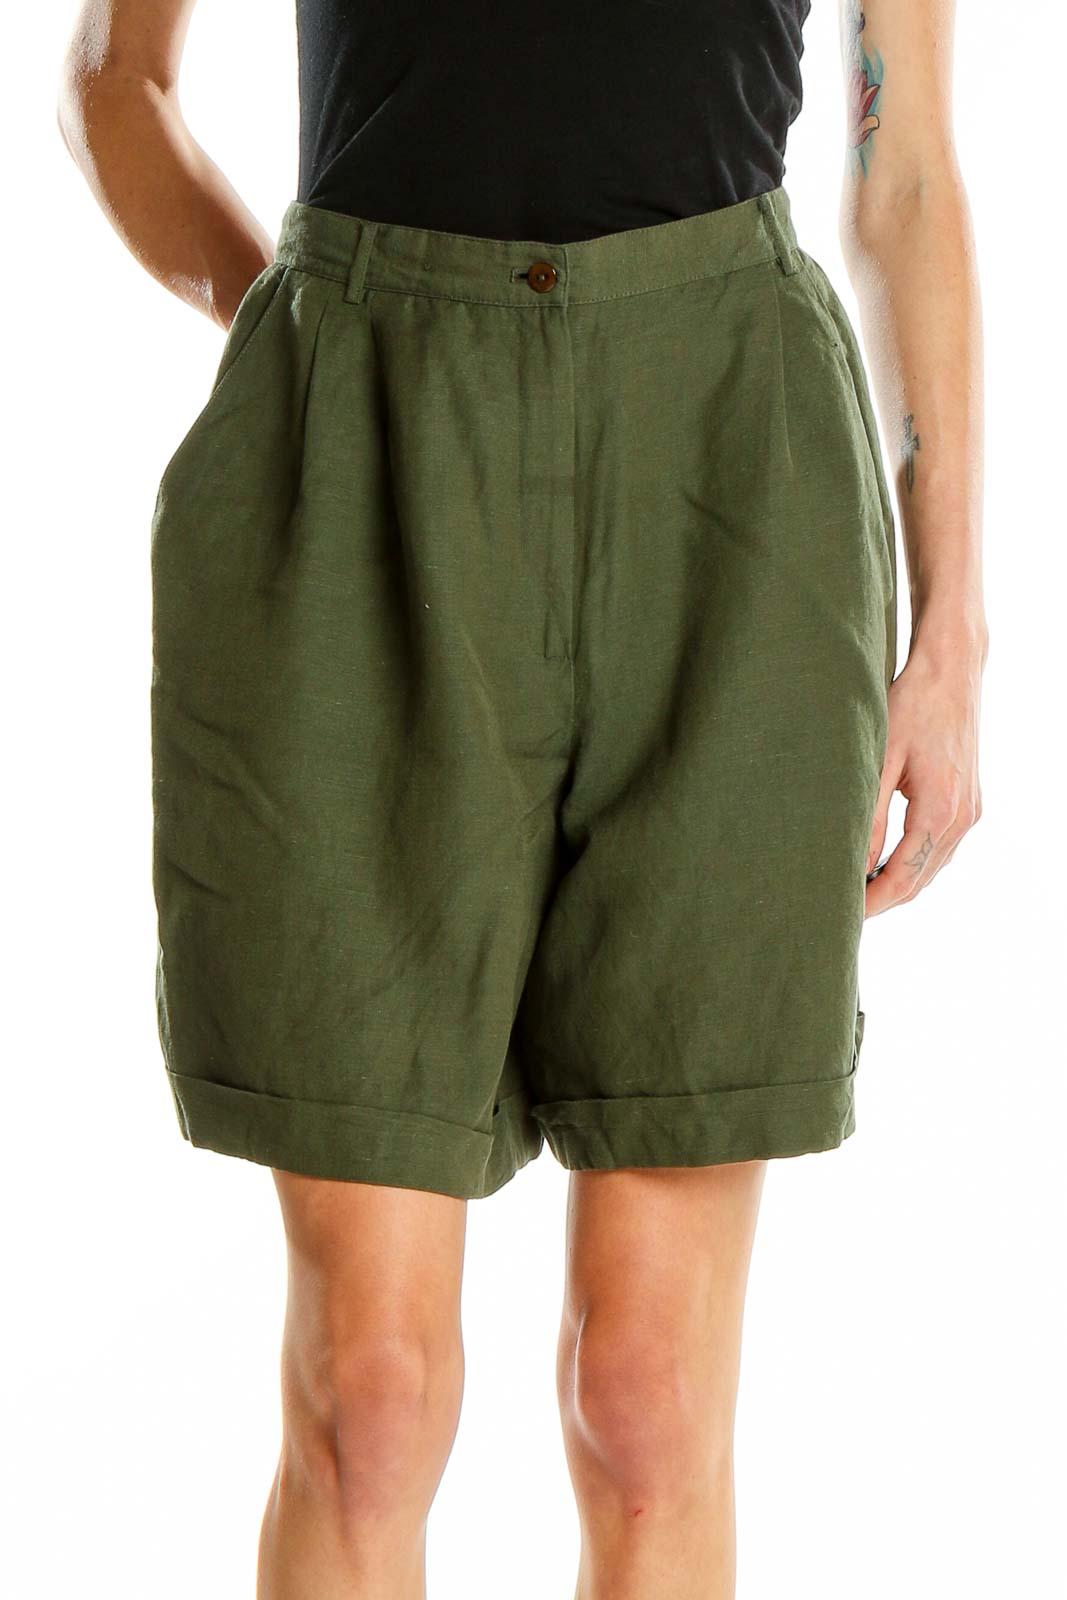 Green Shorts Front